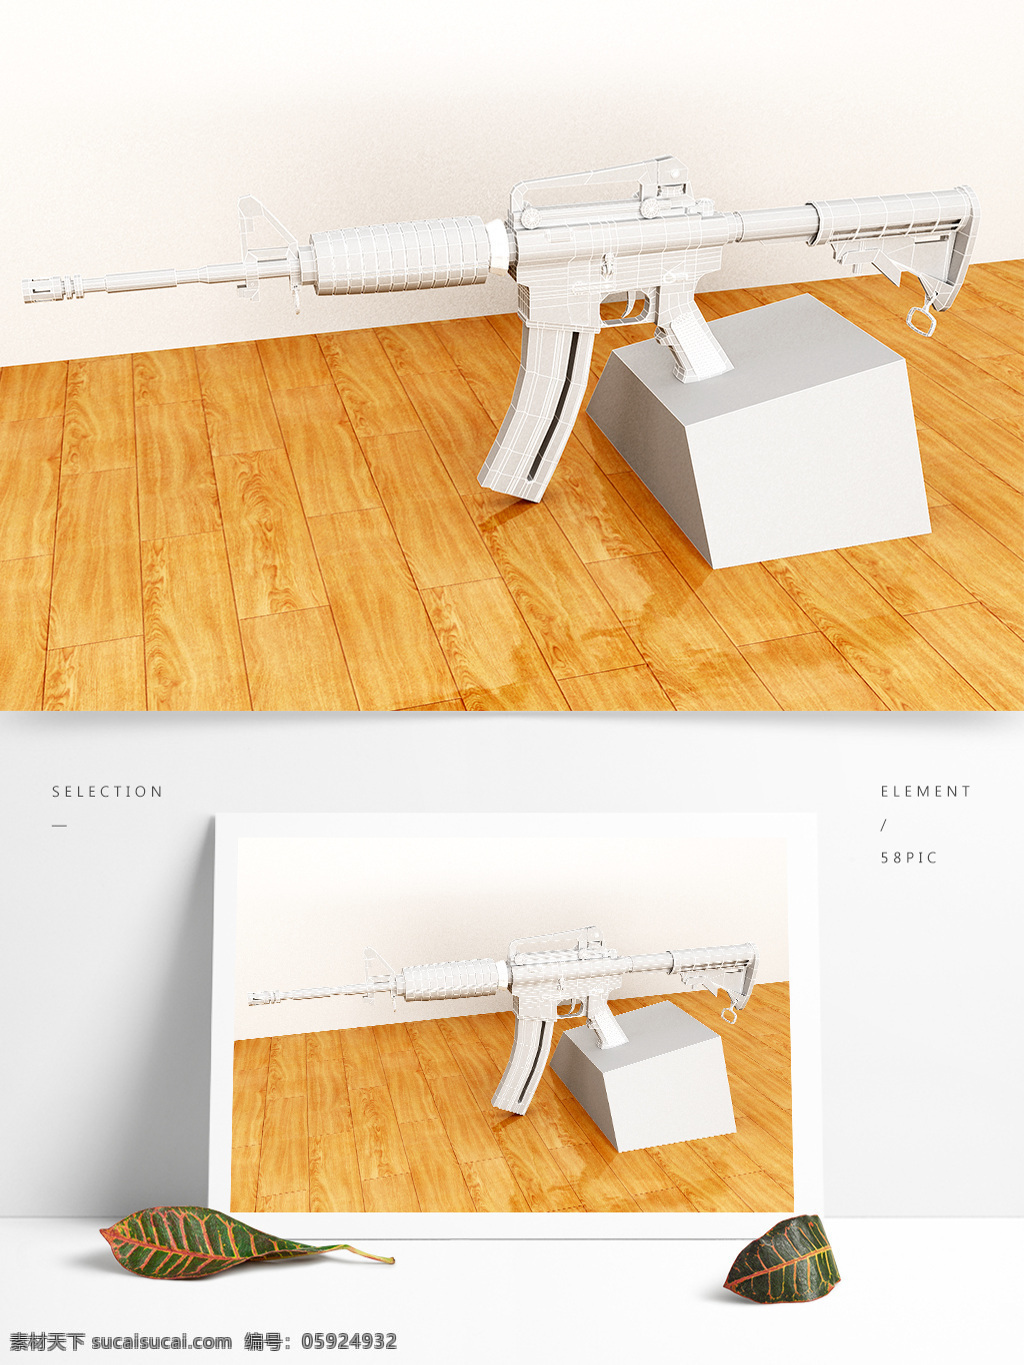 m4 冲锋枪 三维 模型 3d模型 枪模型 枪 白模